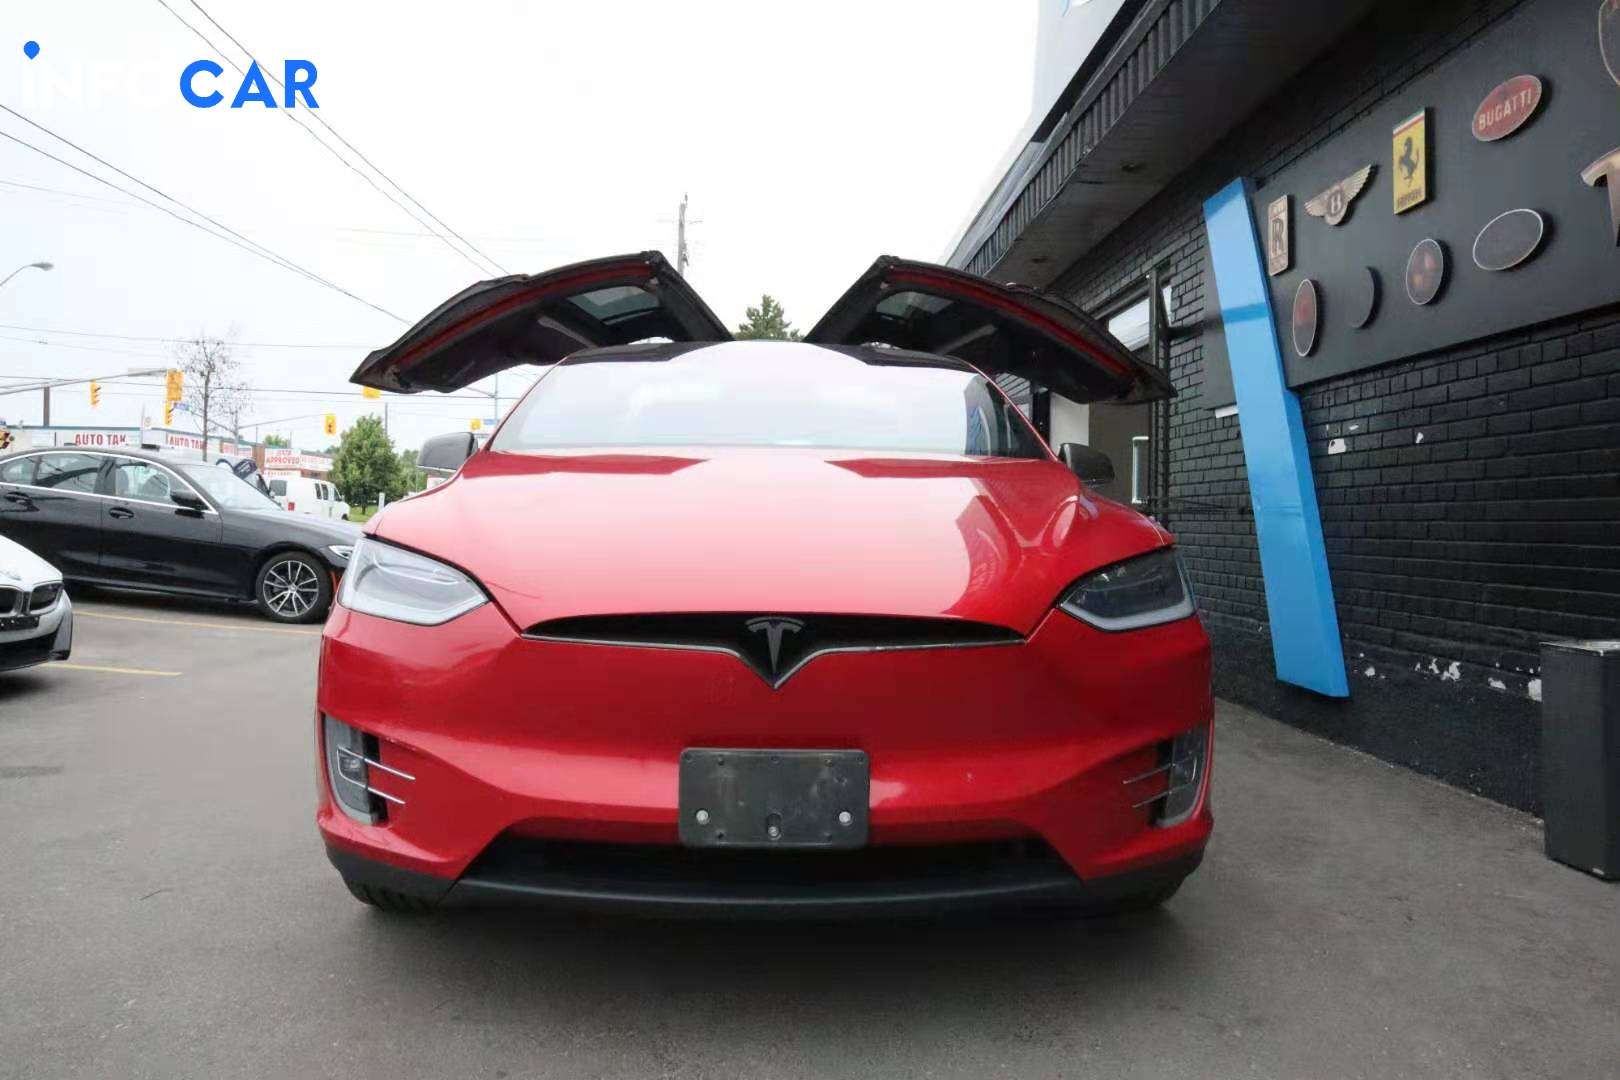 2018 Tesla Model X 100 D - INFOCAR - Toronto Auto Trading Platform